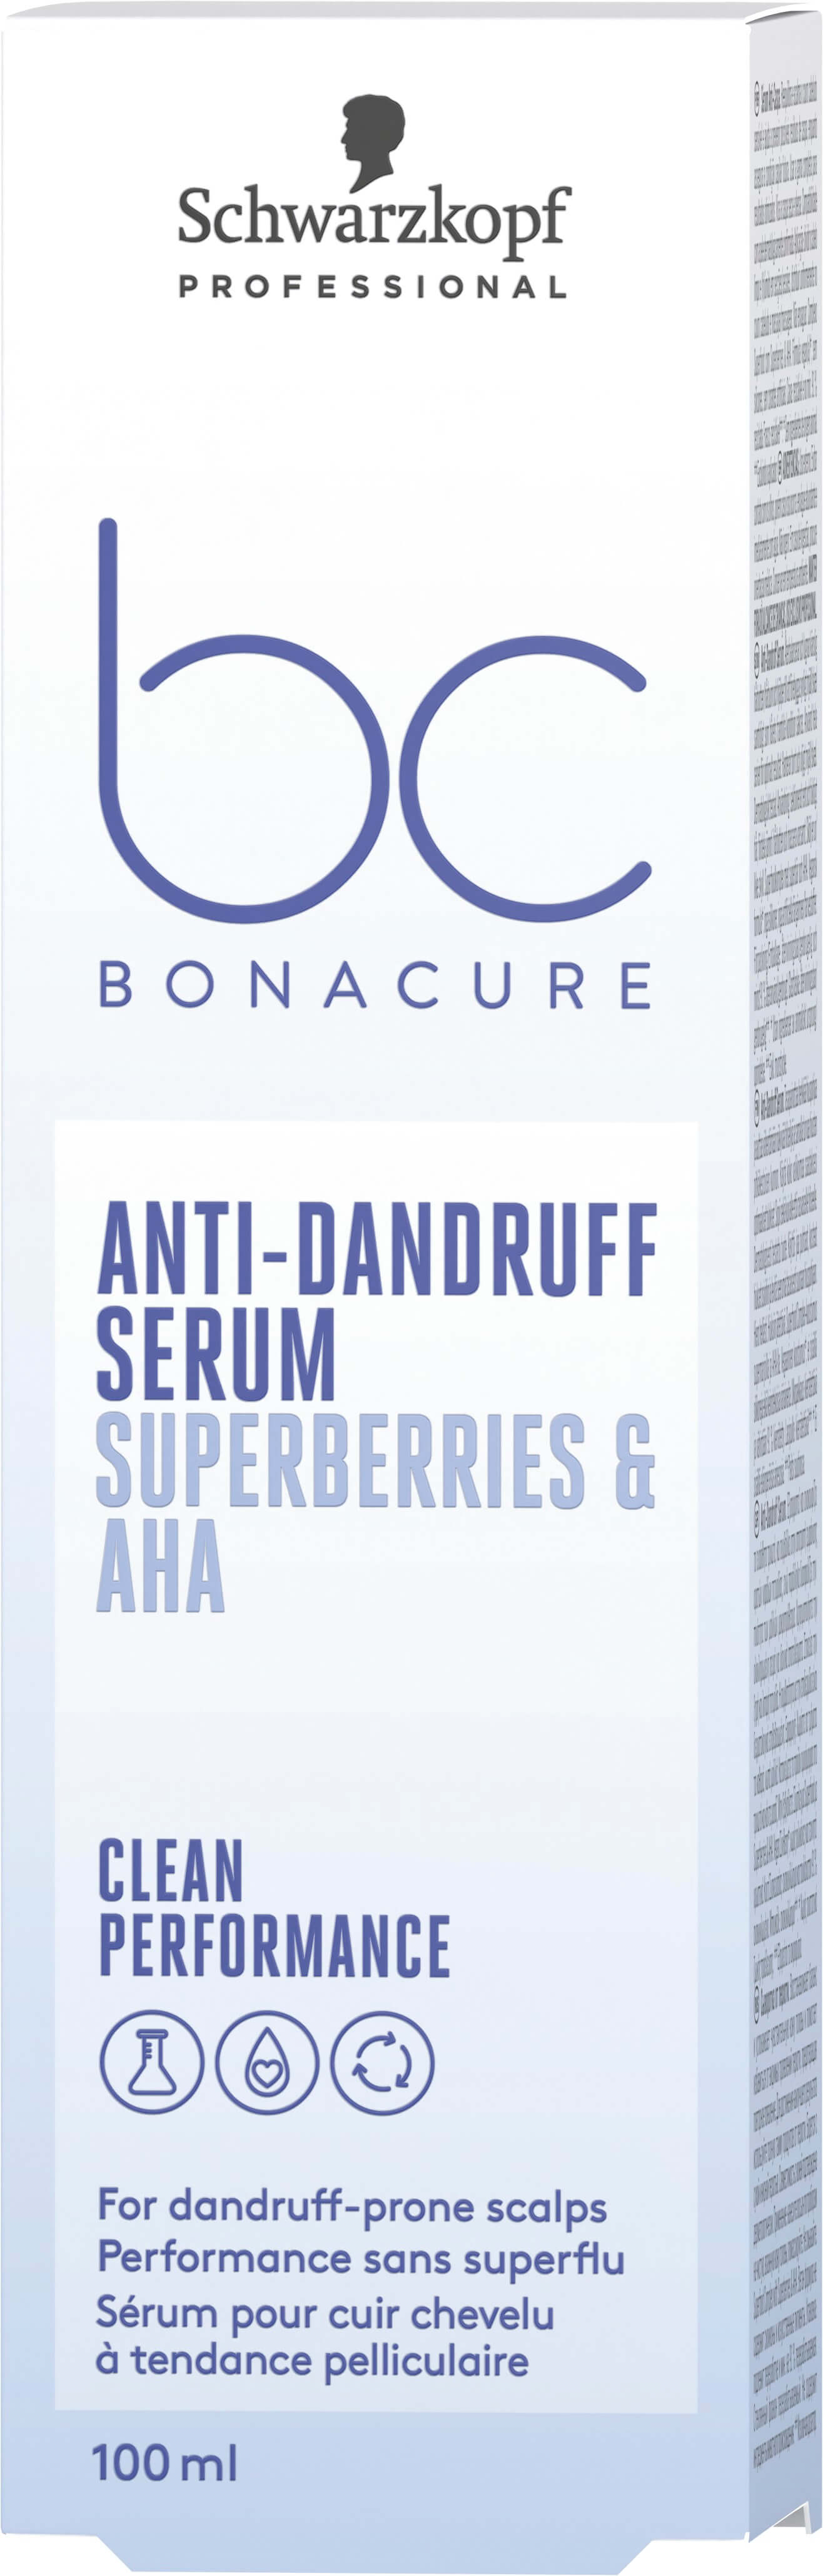 BC Anti-Dandruff Serum 100ml (gegen Schuppen)